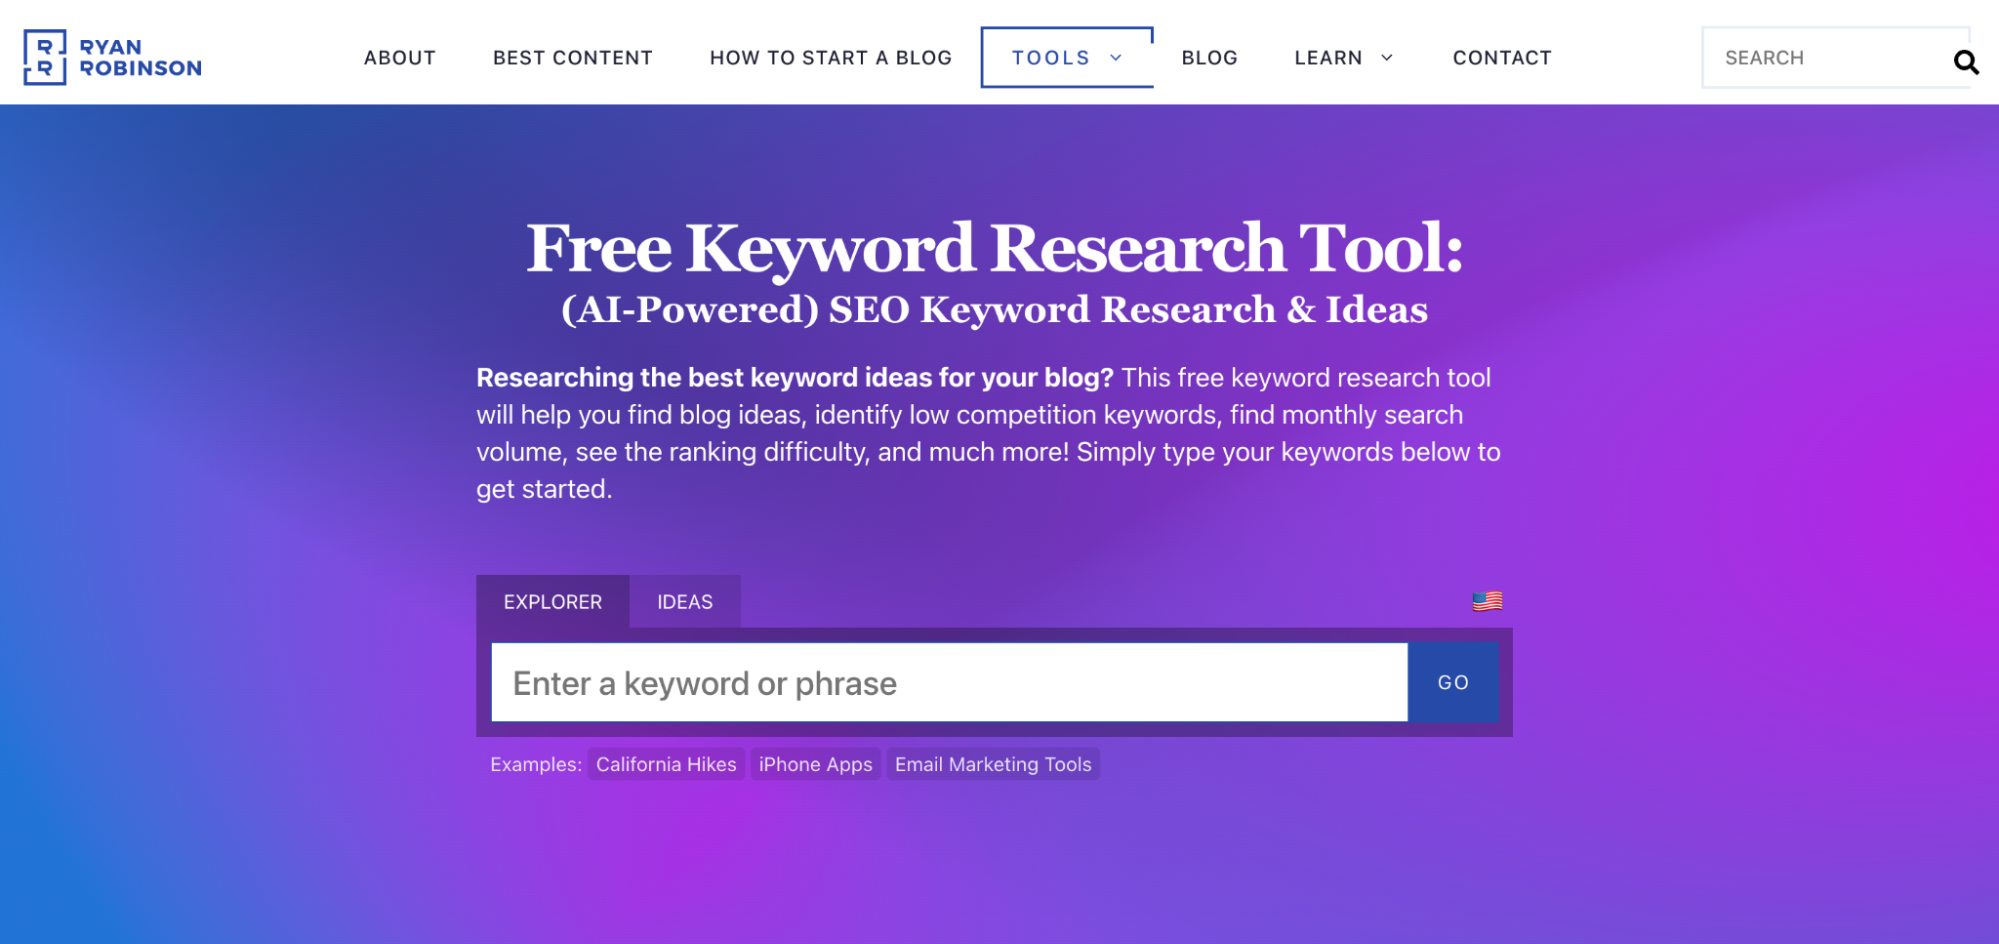 Best free keyword research tools: Ryan Robinson’s Keyword Tool.